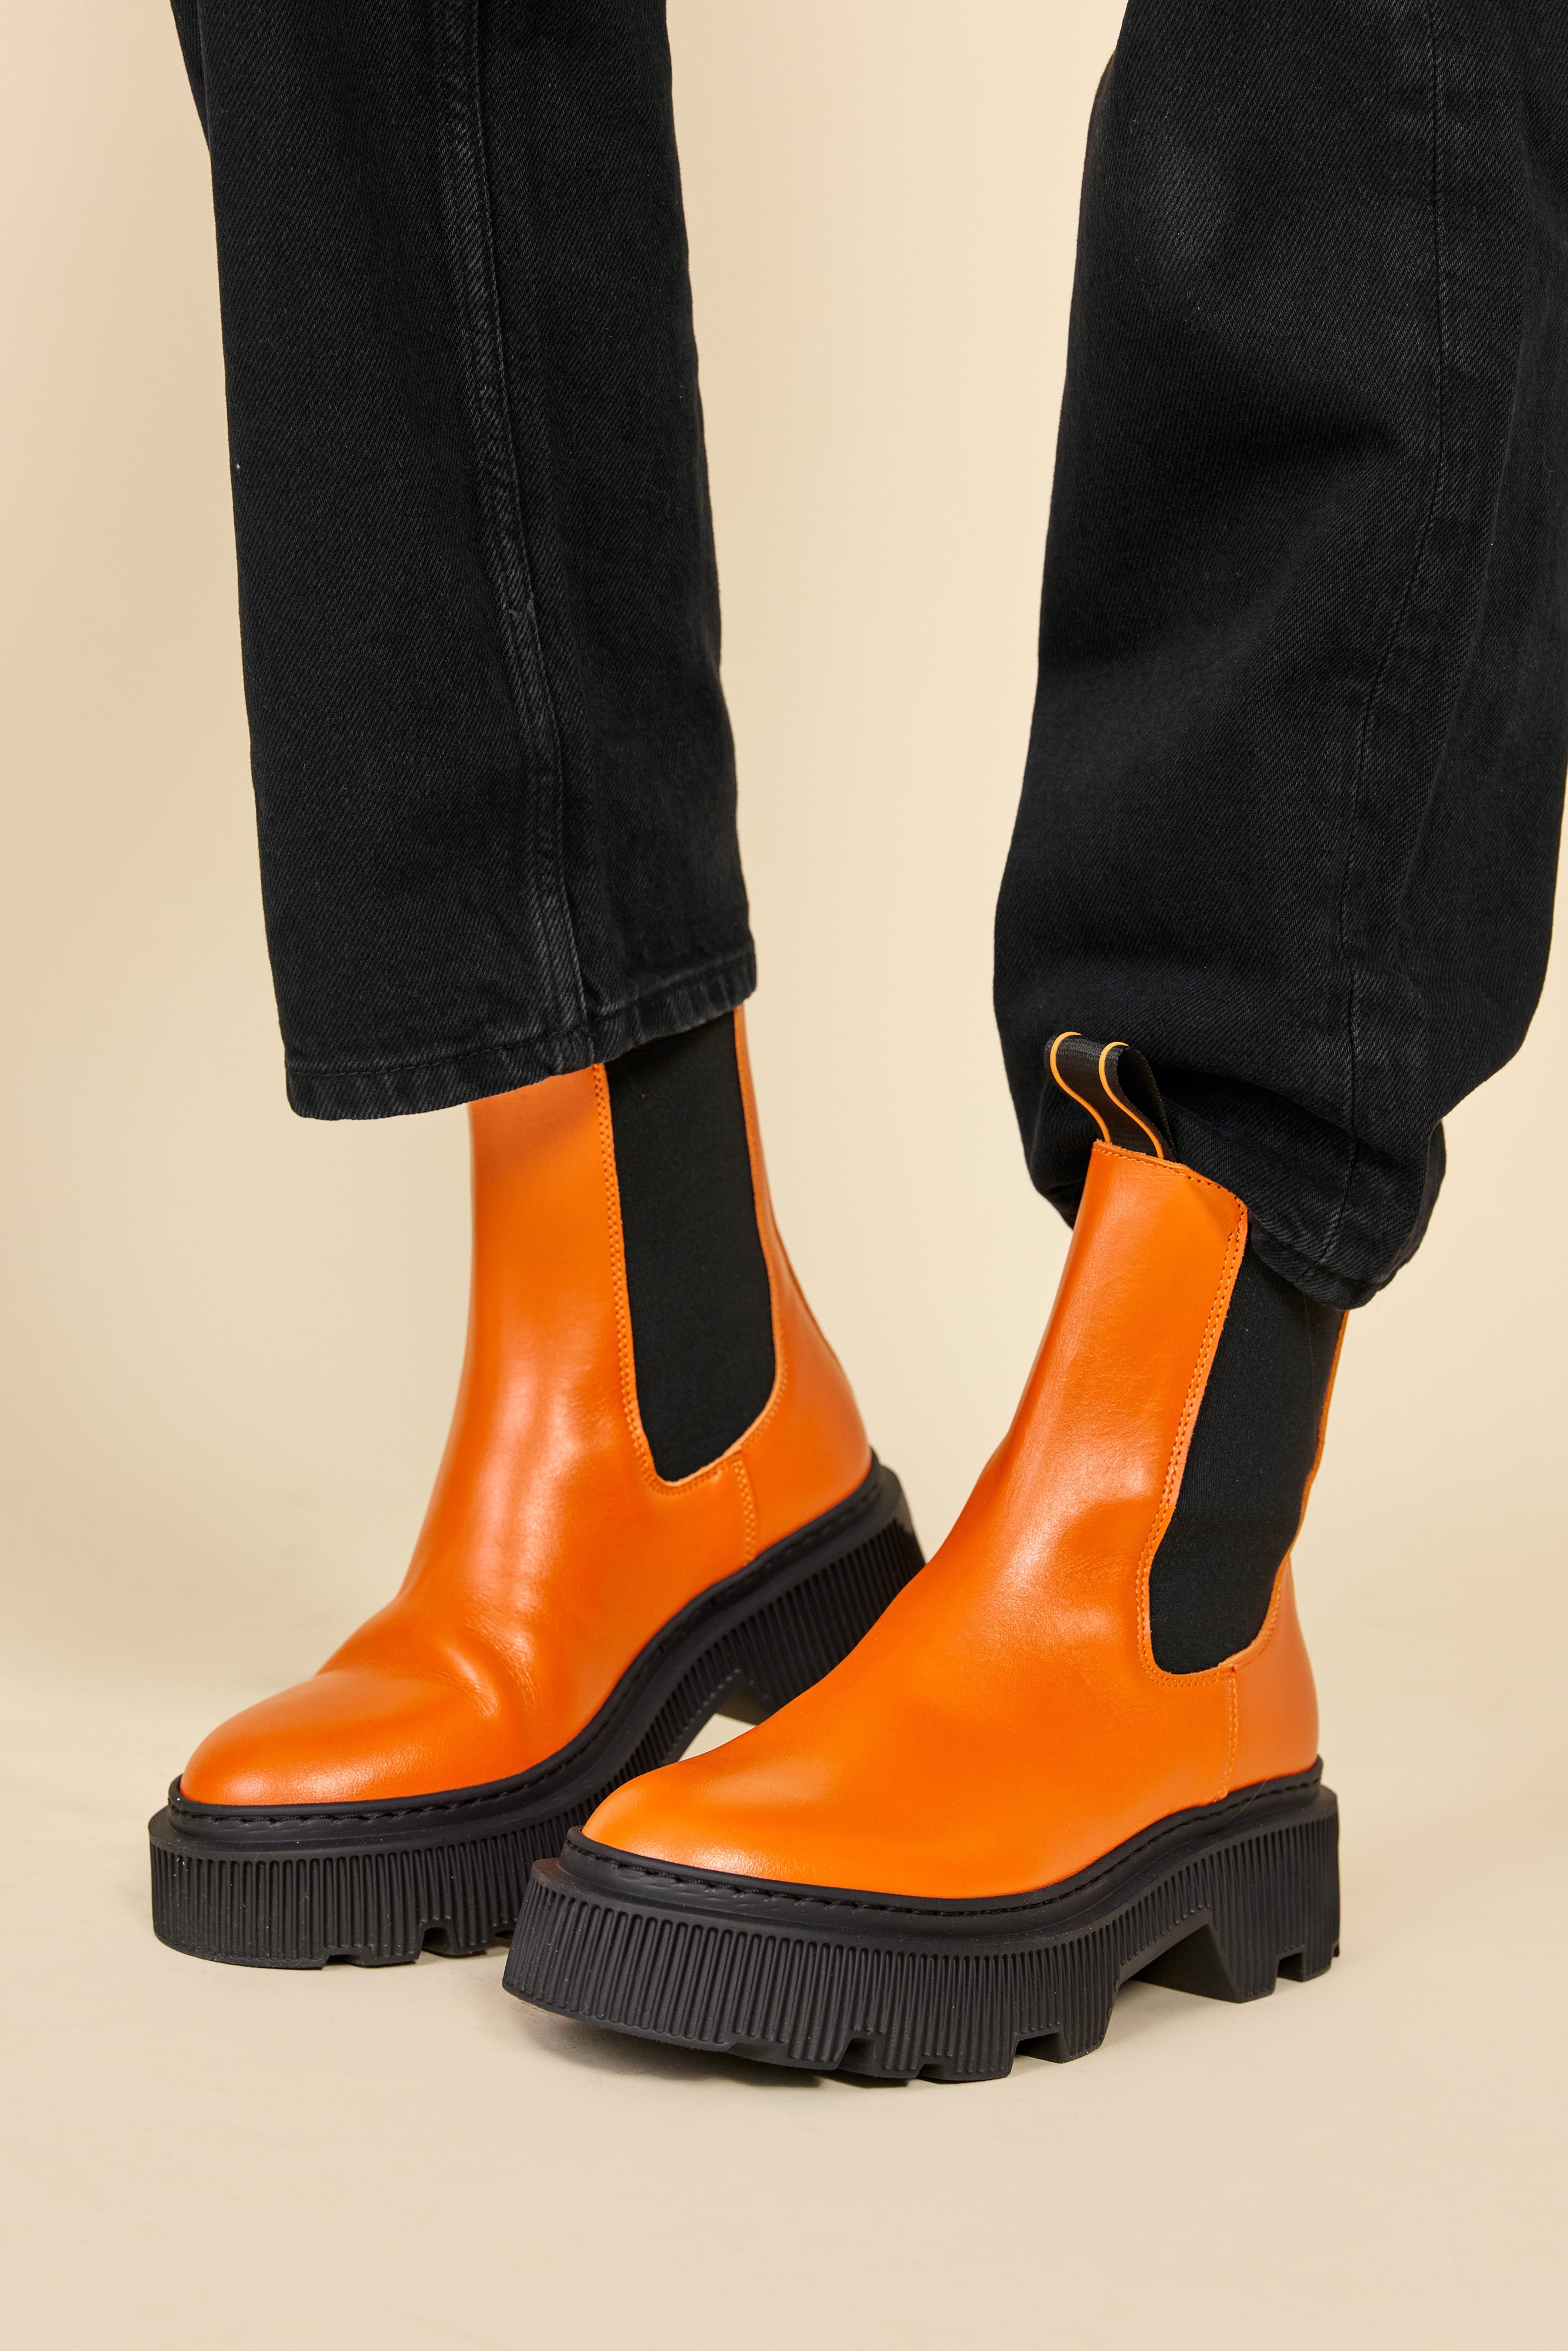 Trixy Orange Chelsea Boots LAST1632 - 10